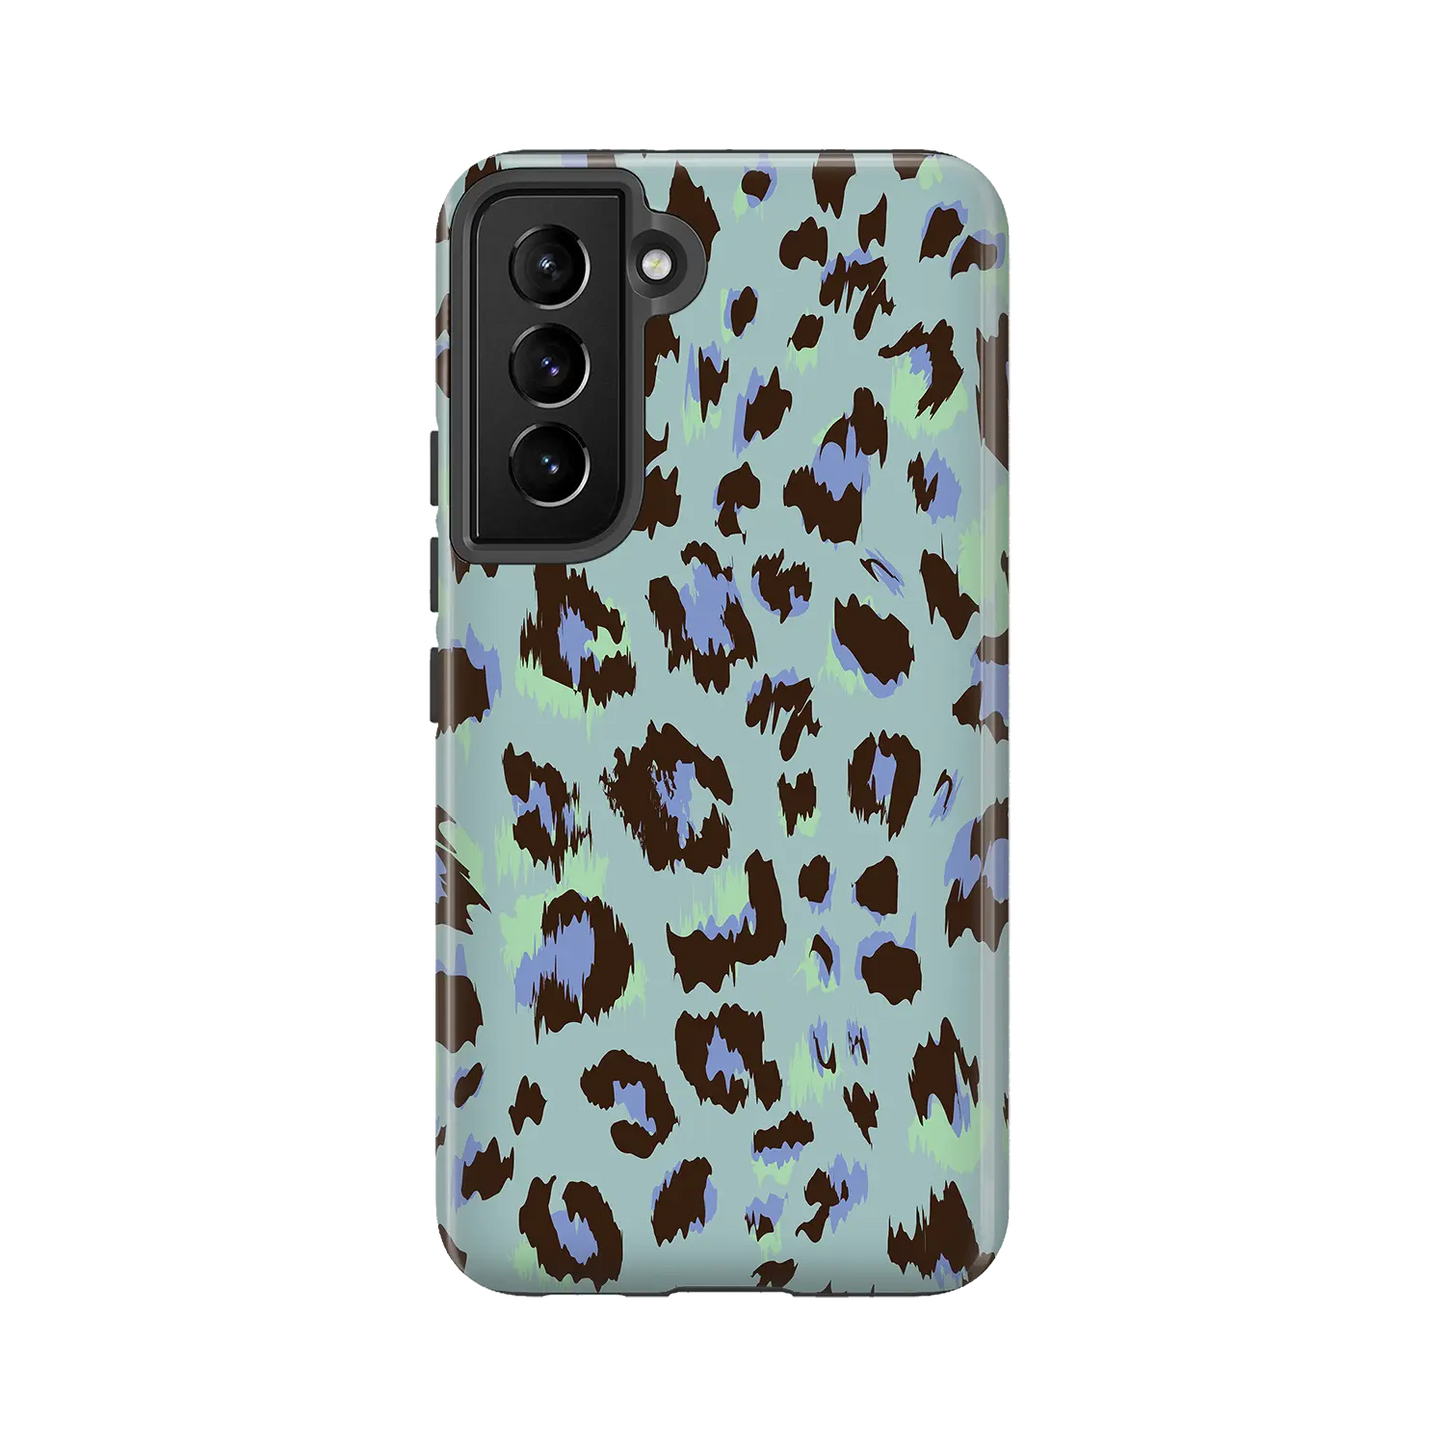 Wild Cheetah Print - Personalised Galaxy S Case